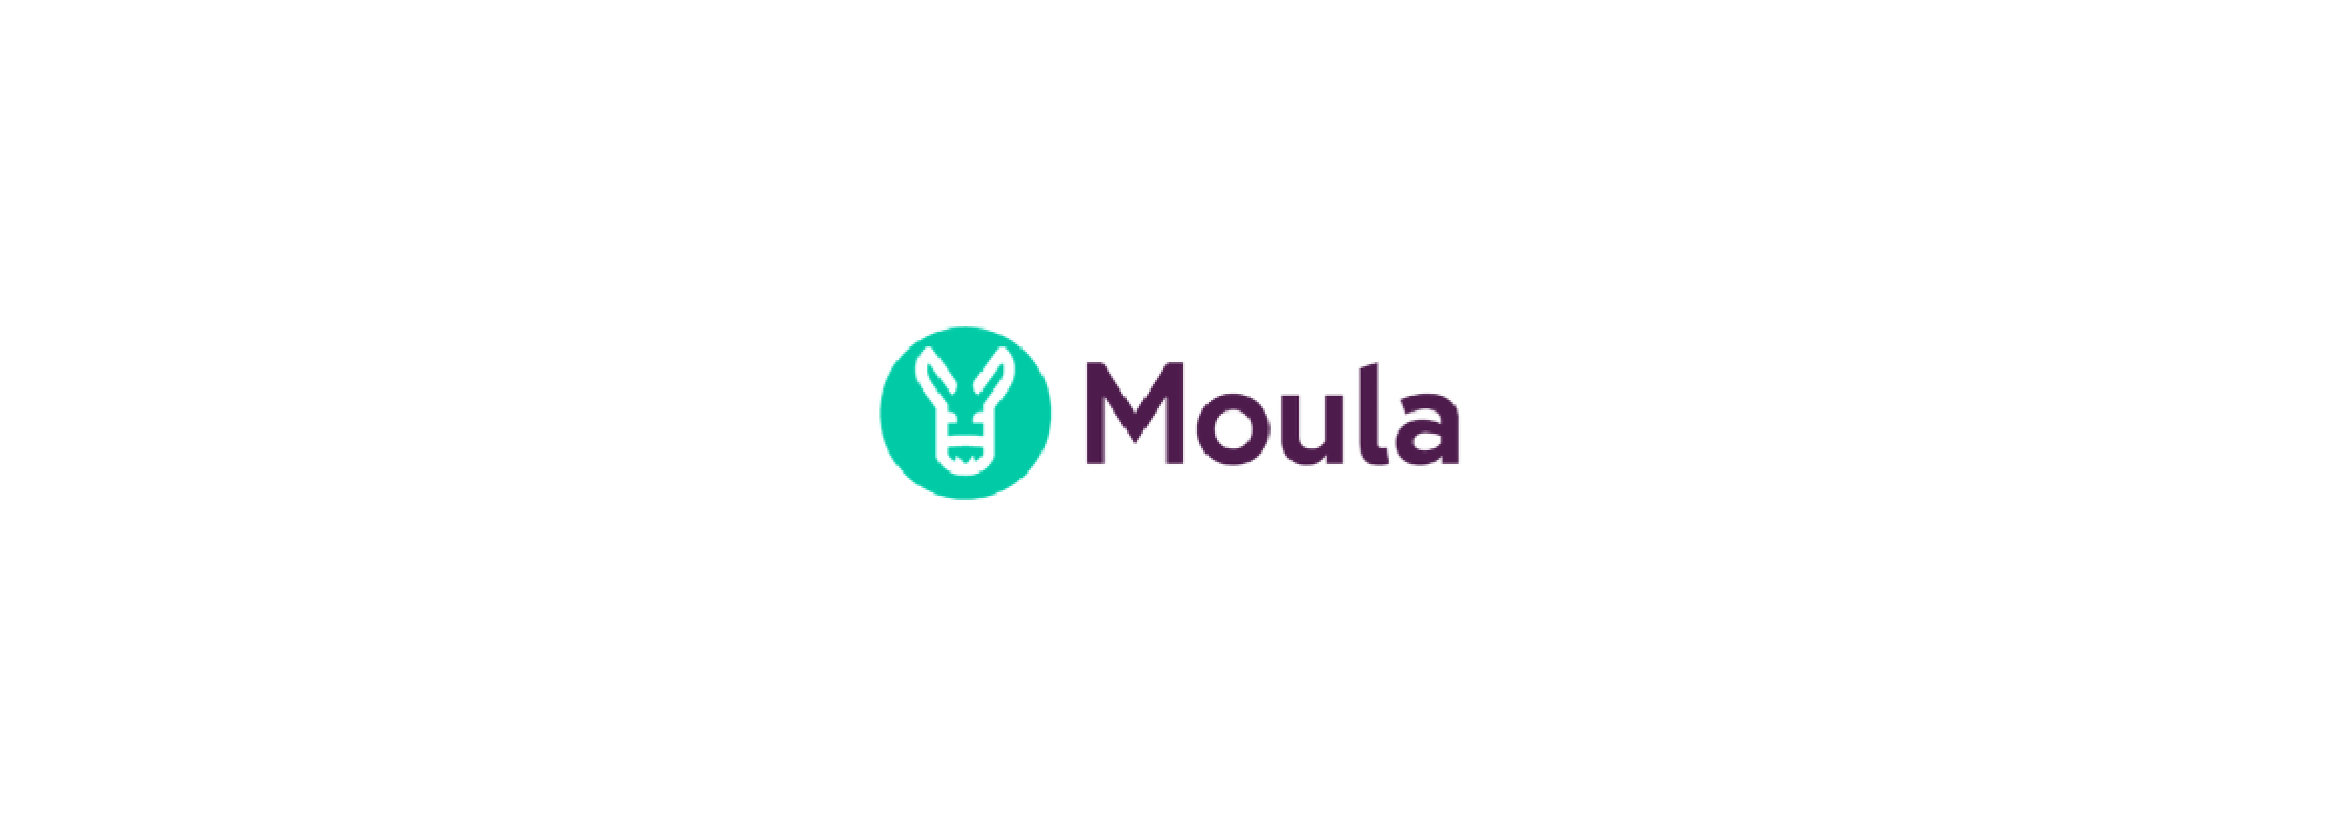 The Moula logo